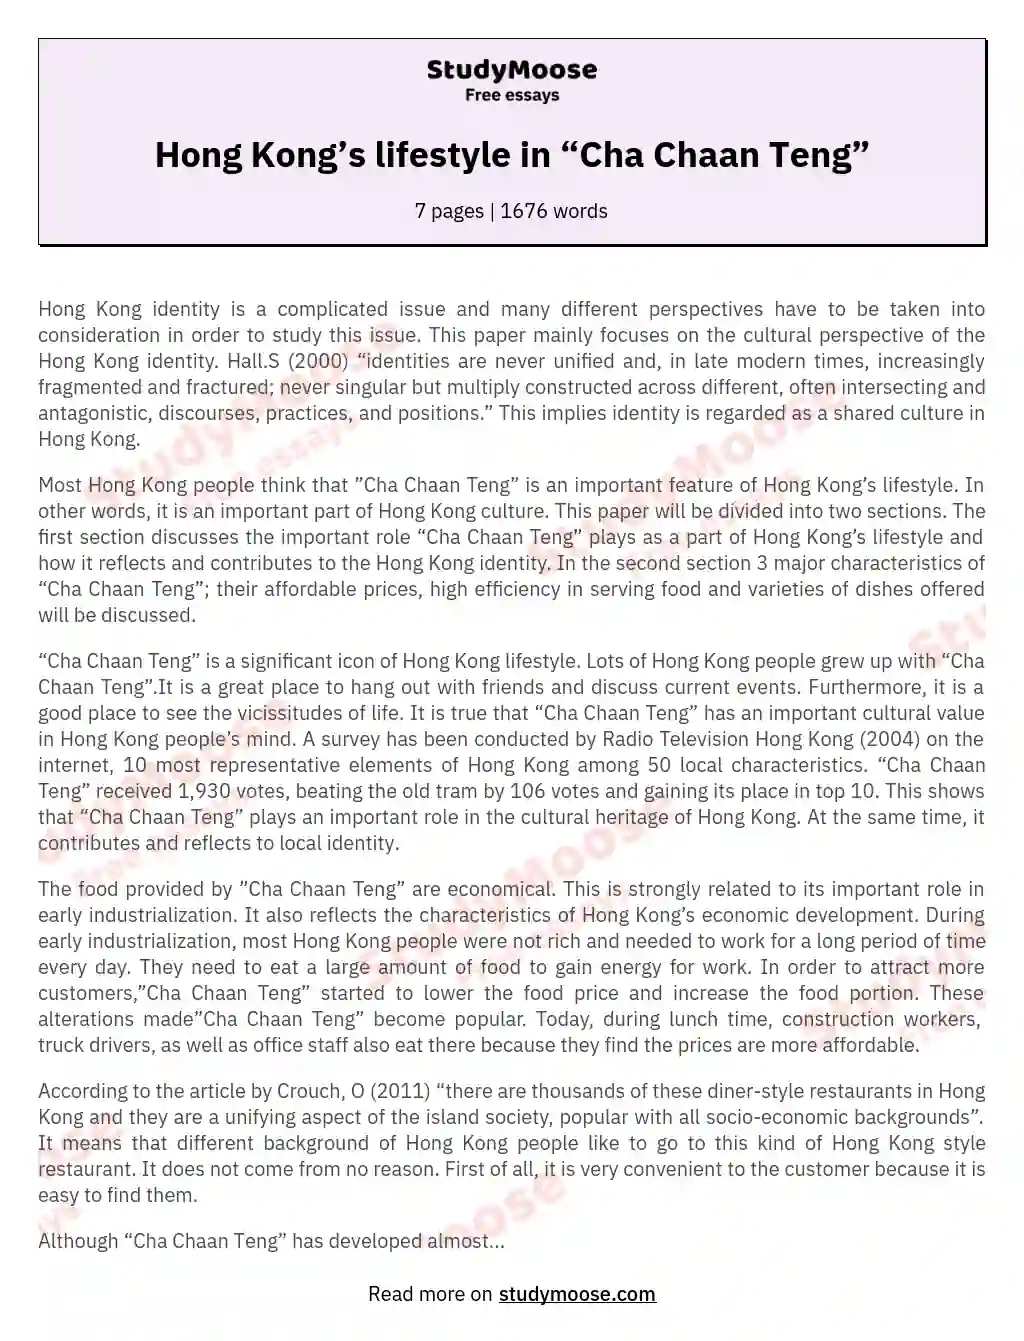 Hong Kong’s lifestyle in “Cha Chaan Teng” essay